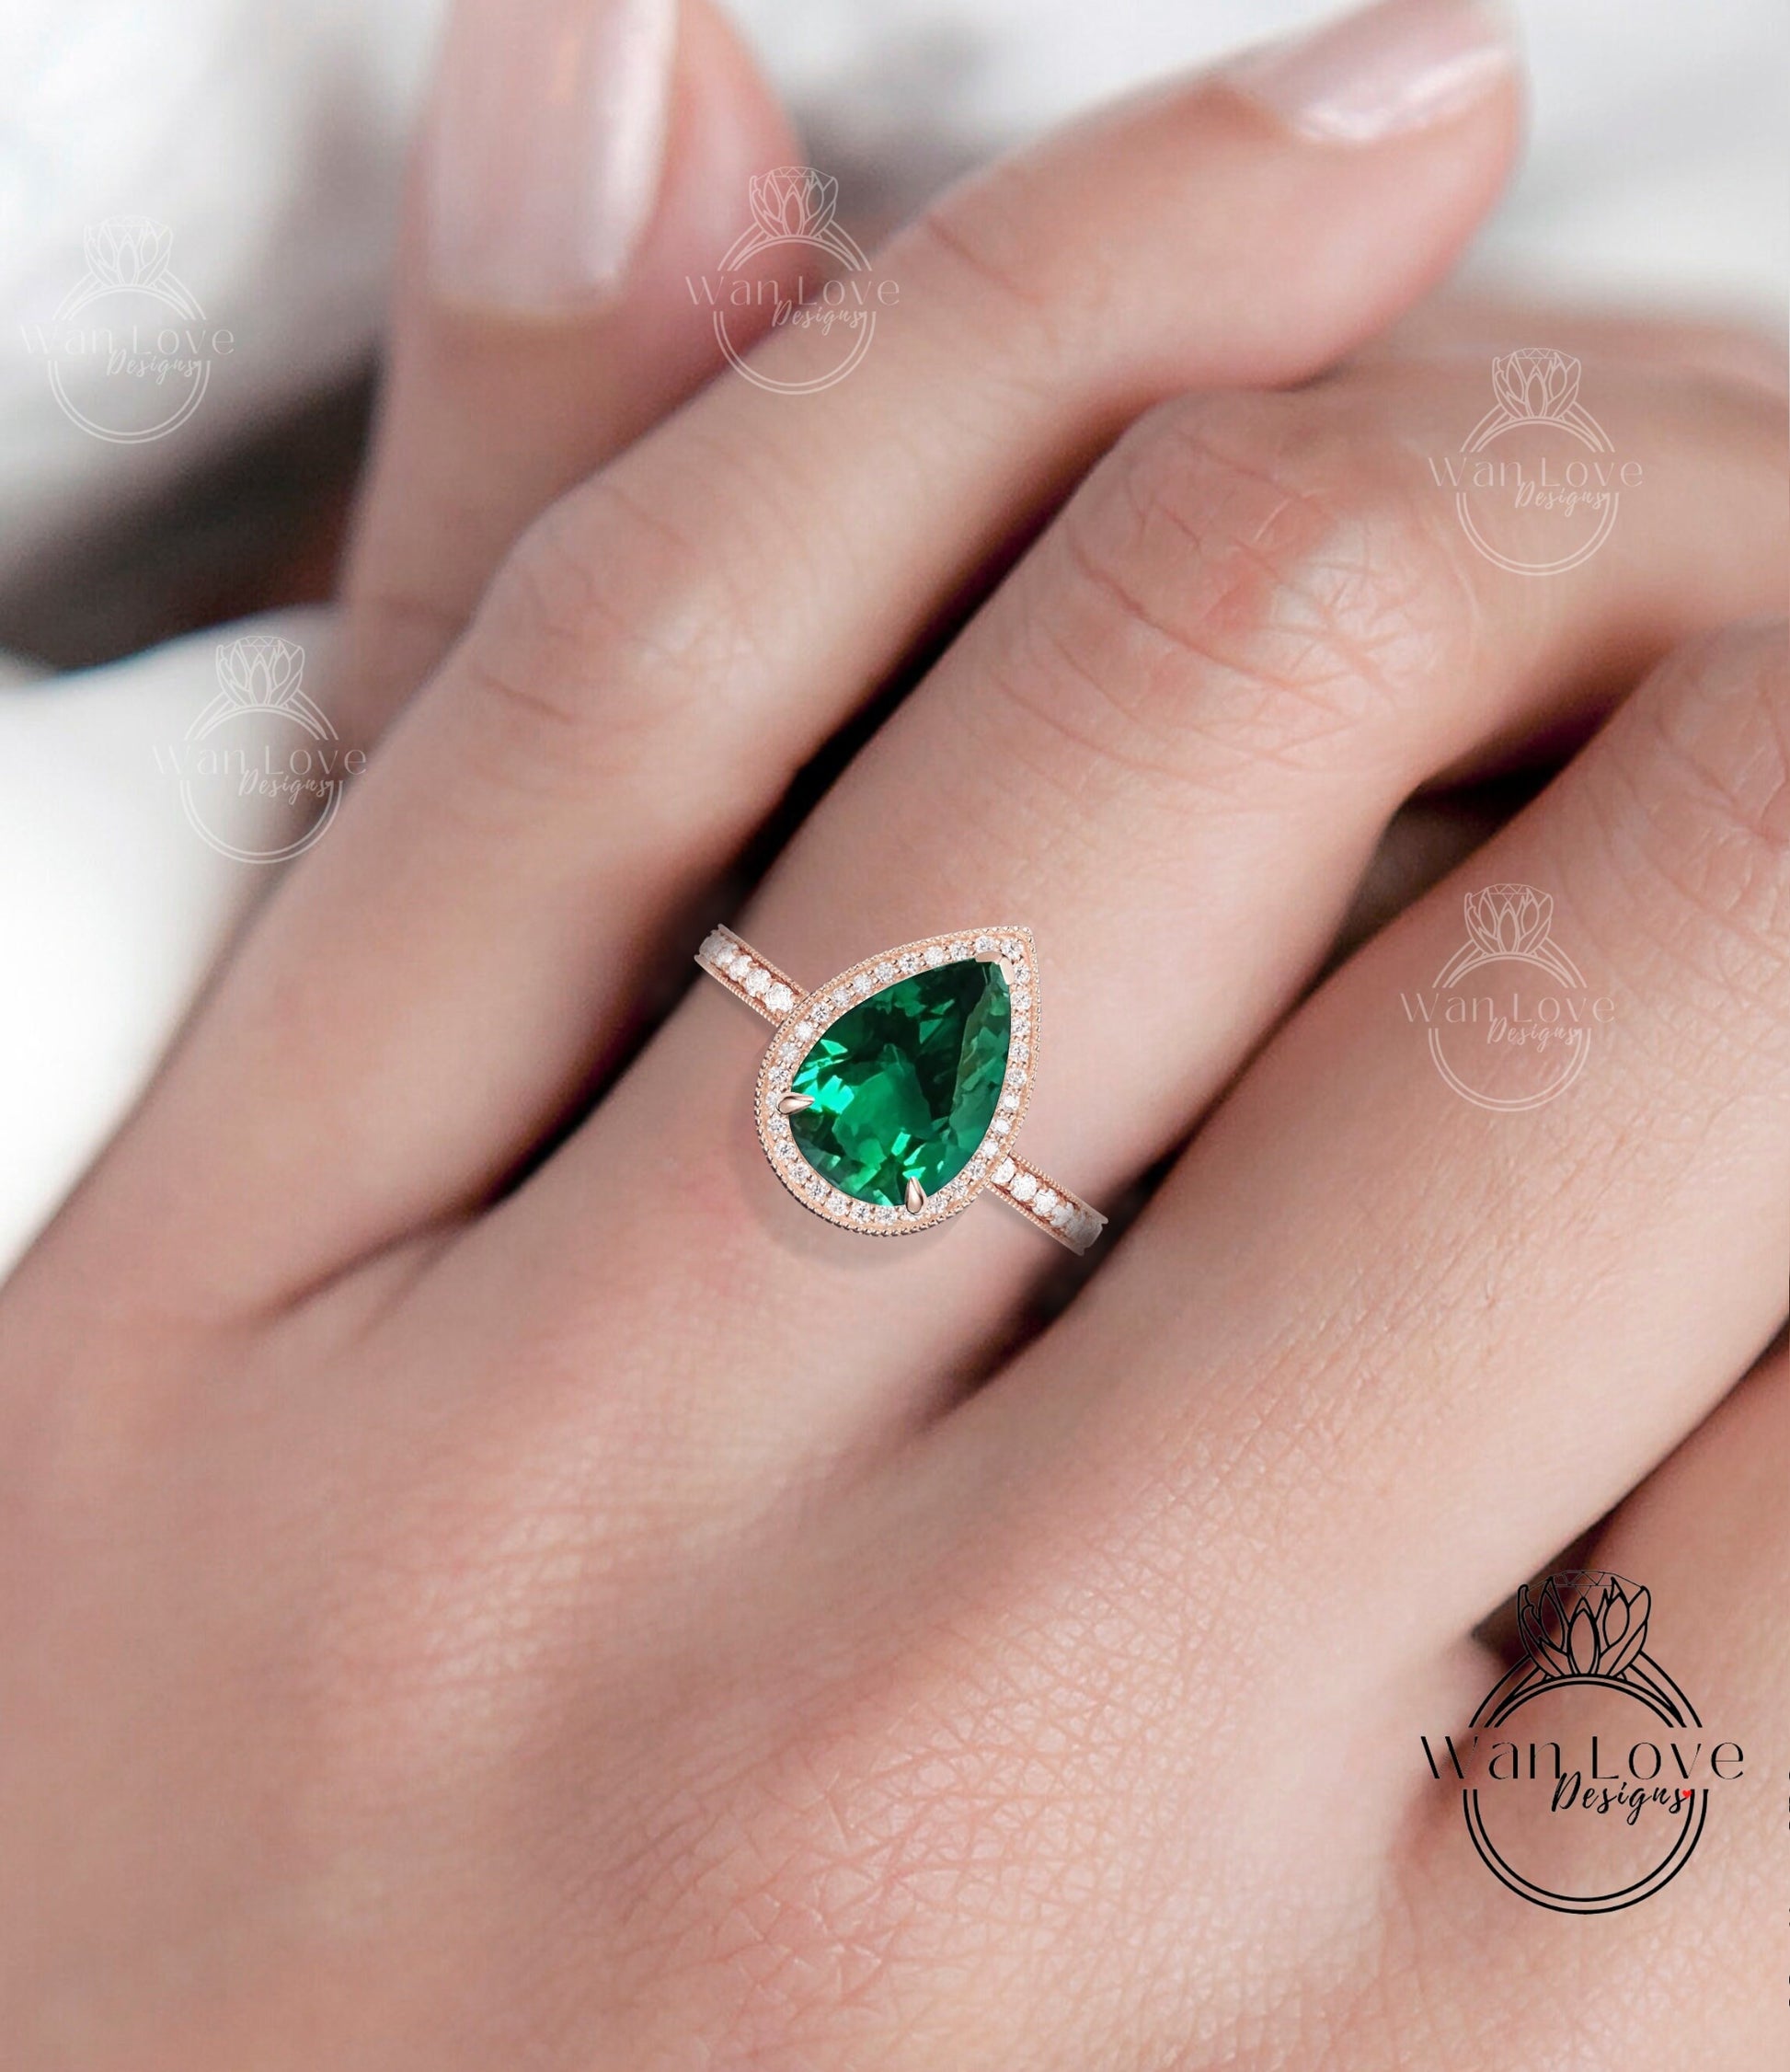 Vintage engagement ring Emerald ring rose gold Pear cut diamond ring milgrain halo art deco ring wedding Anniversary ring bridal ring